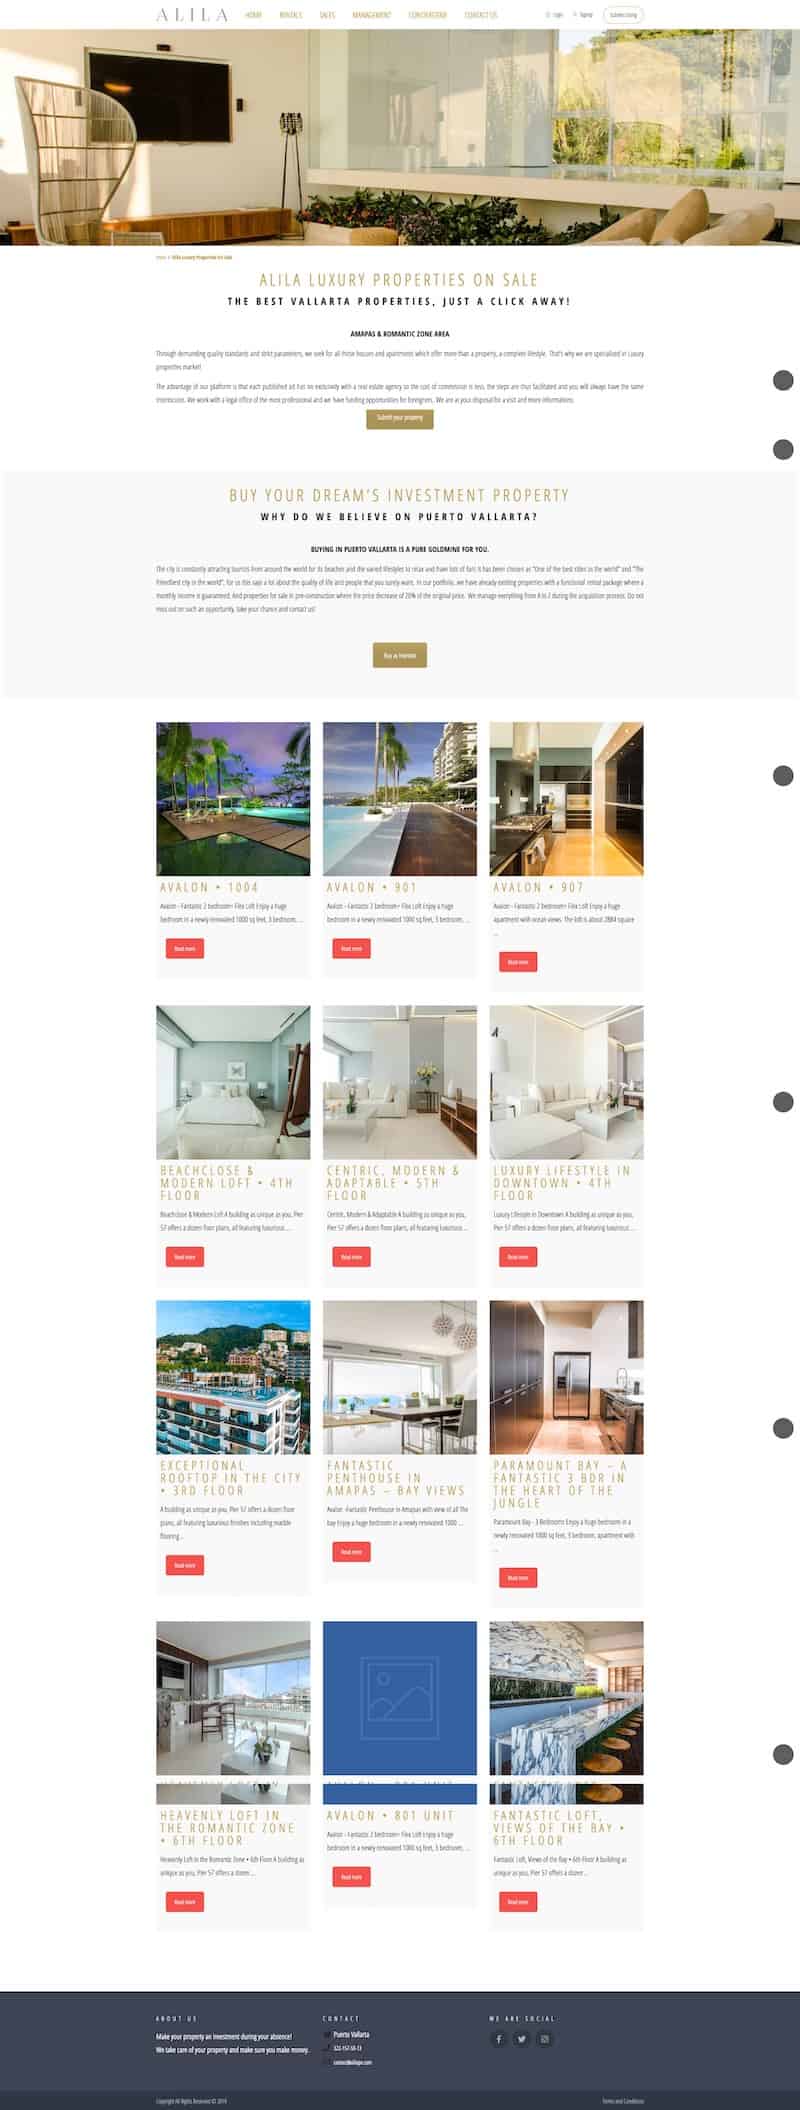 Chriz-Marshall-Web-Design-Alila-Luxury-Properties-On-Sale